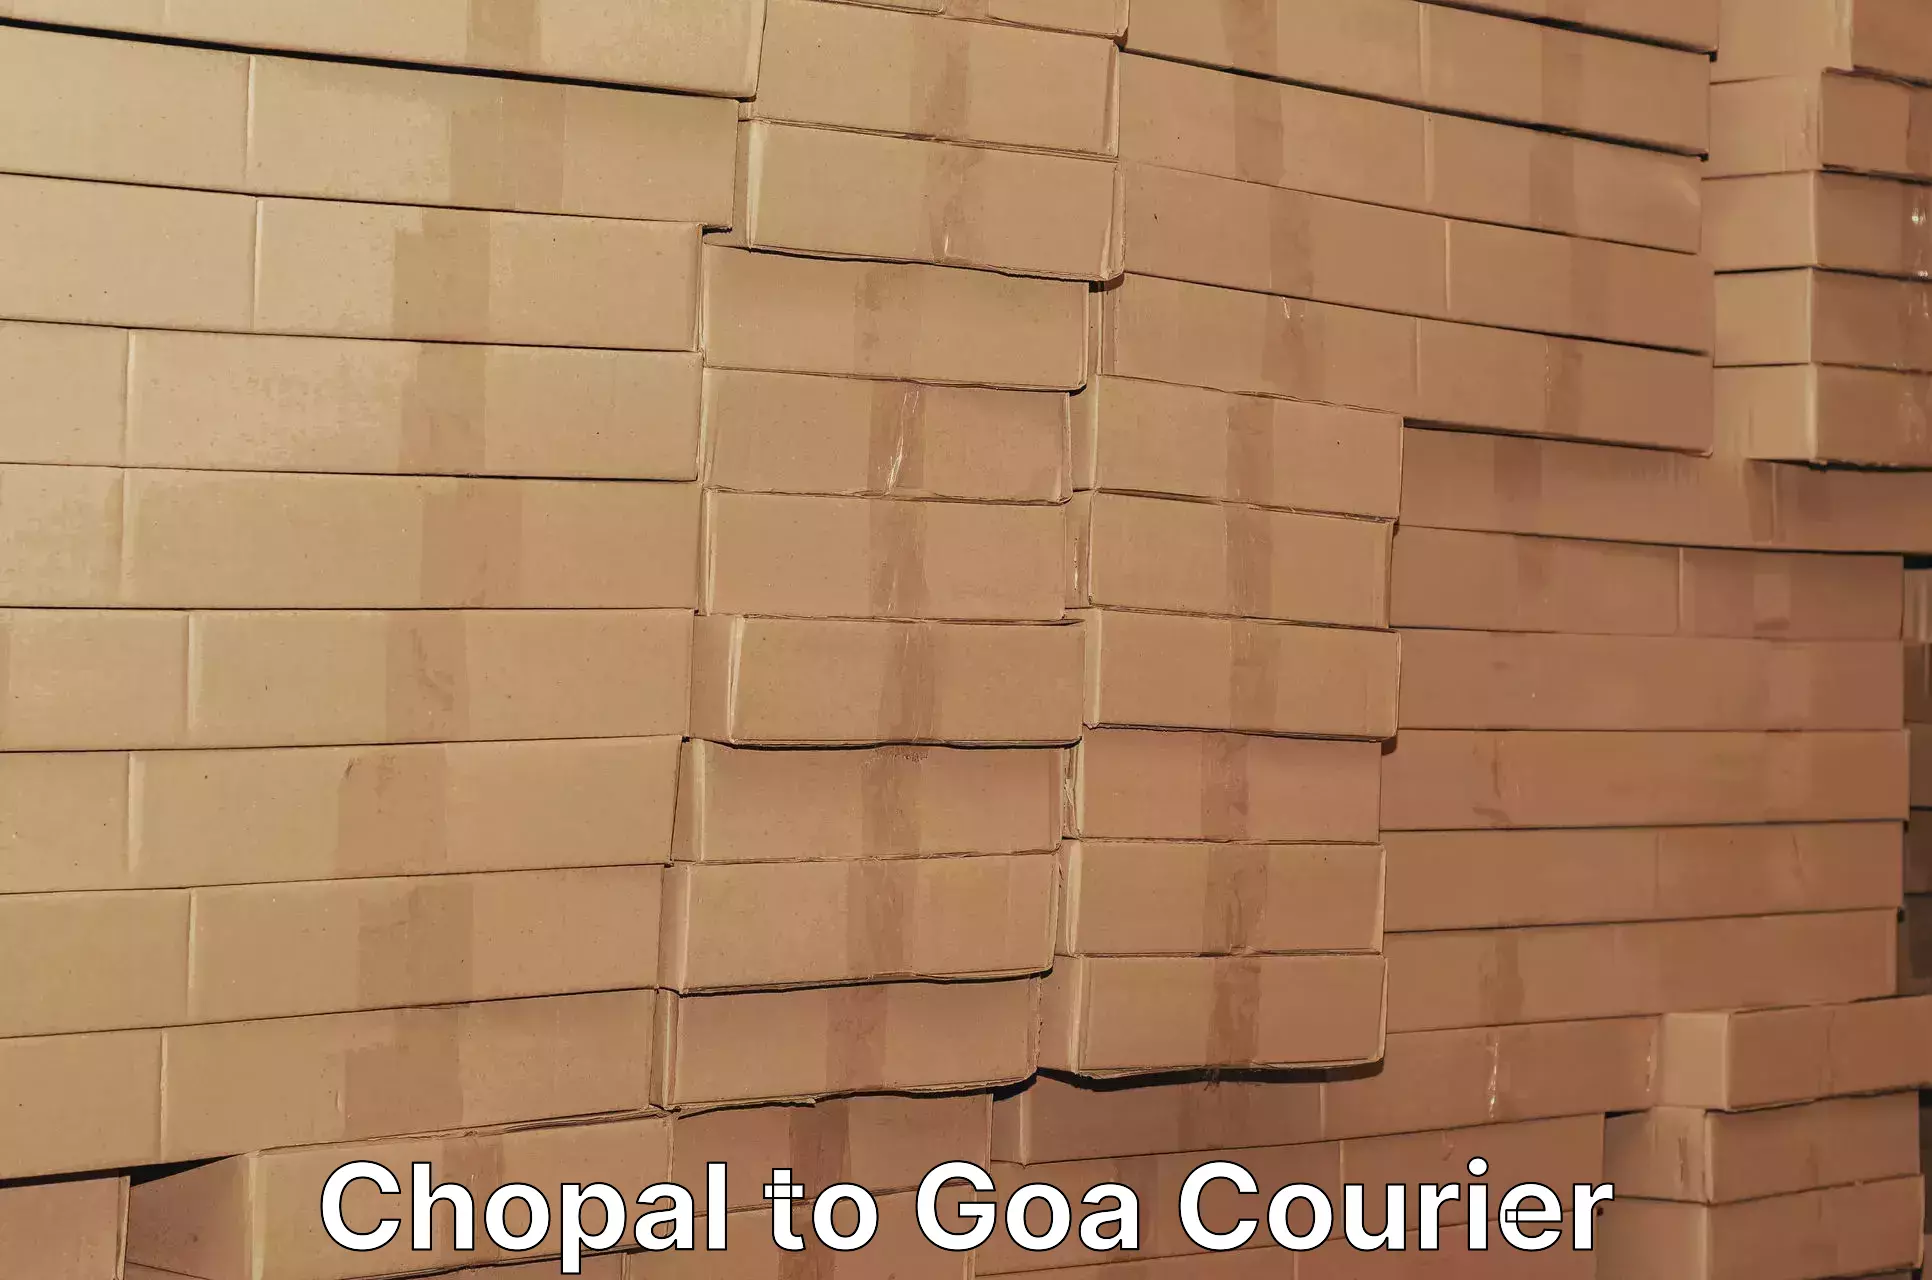 Logistics service provider Chopal to Goa University